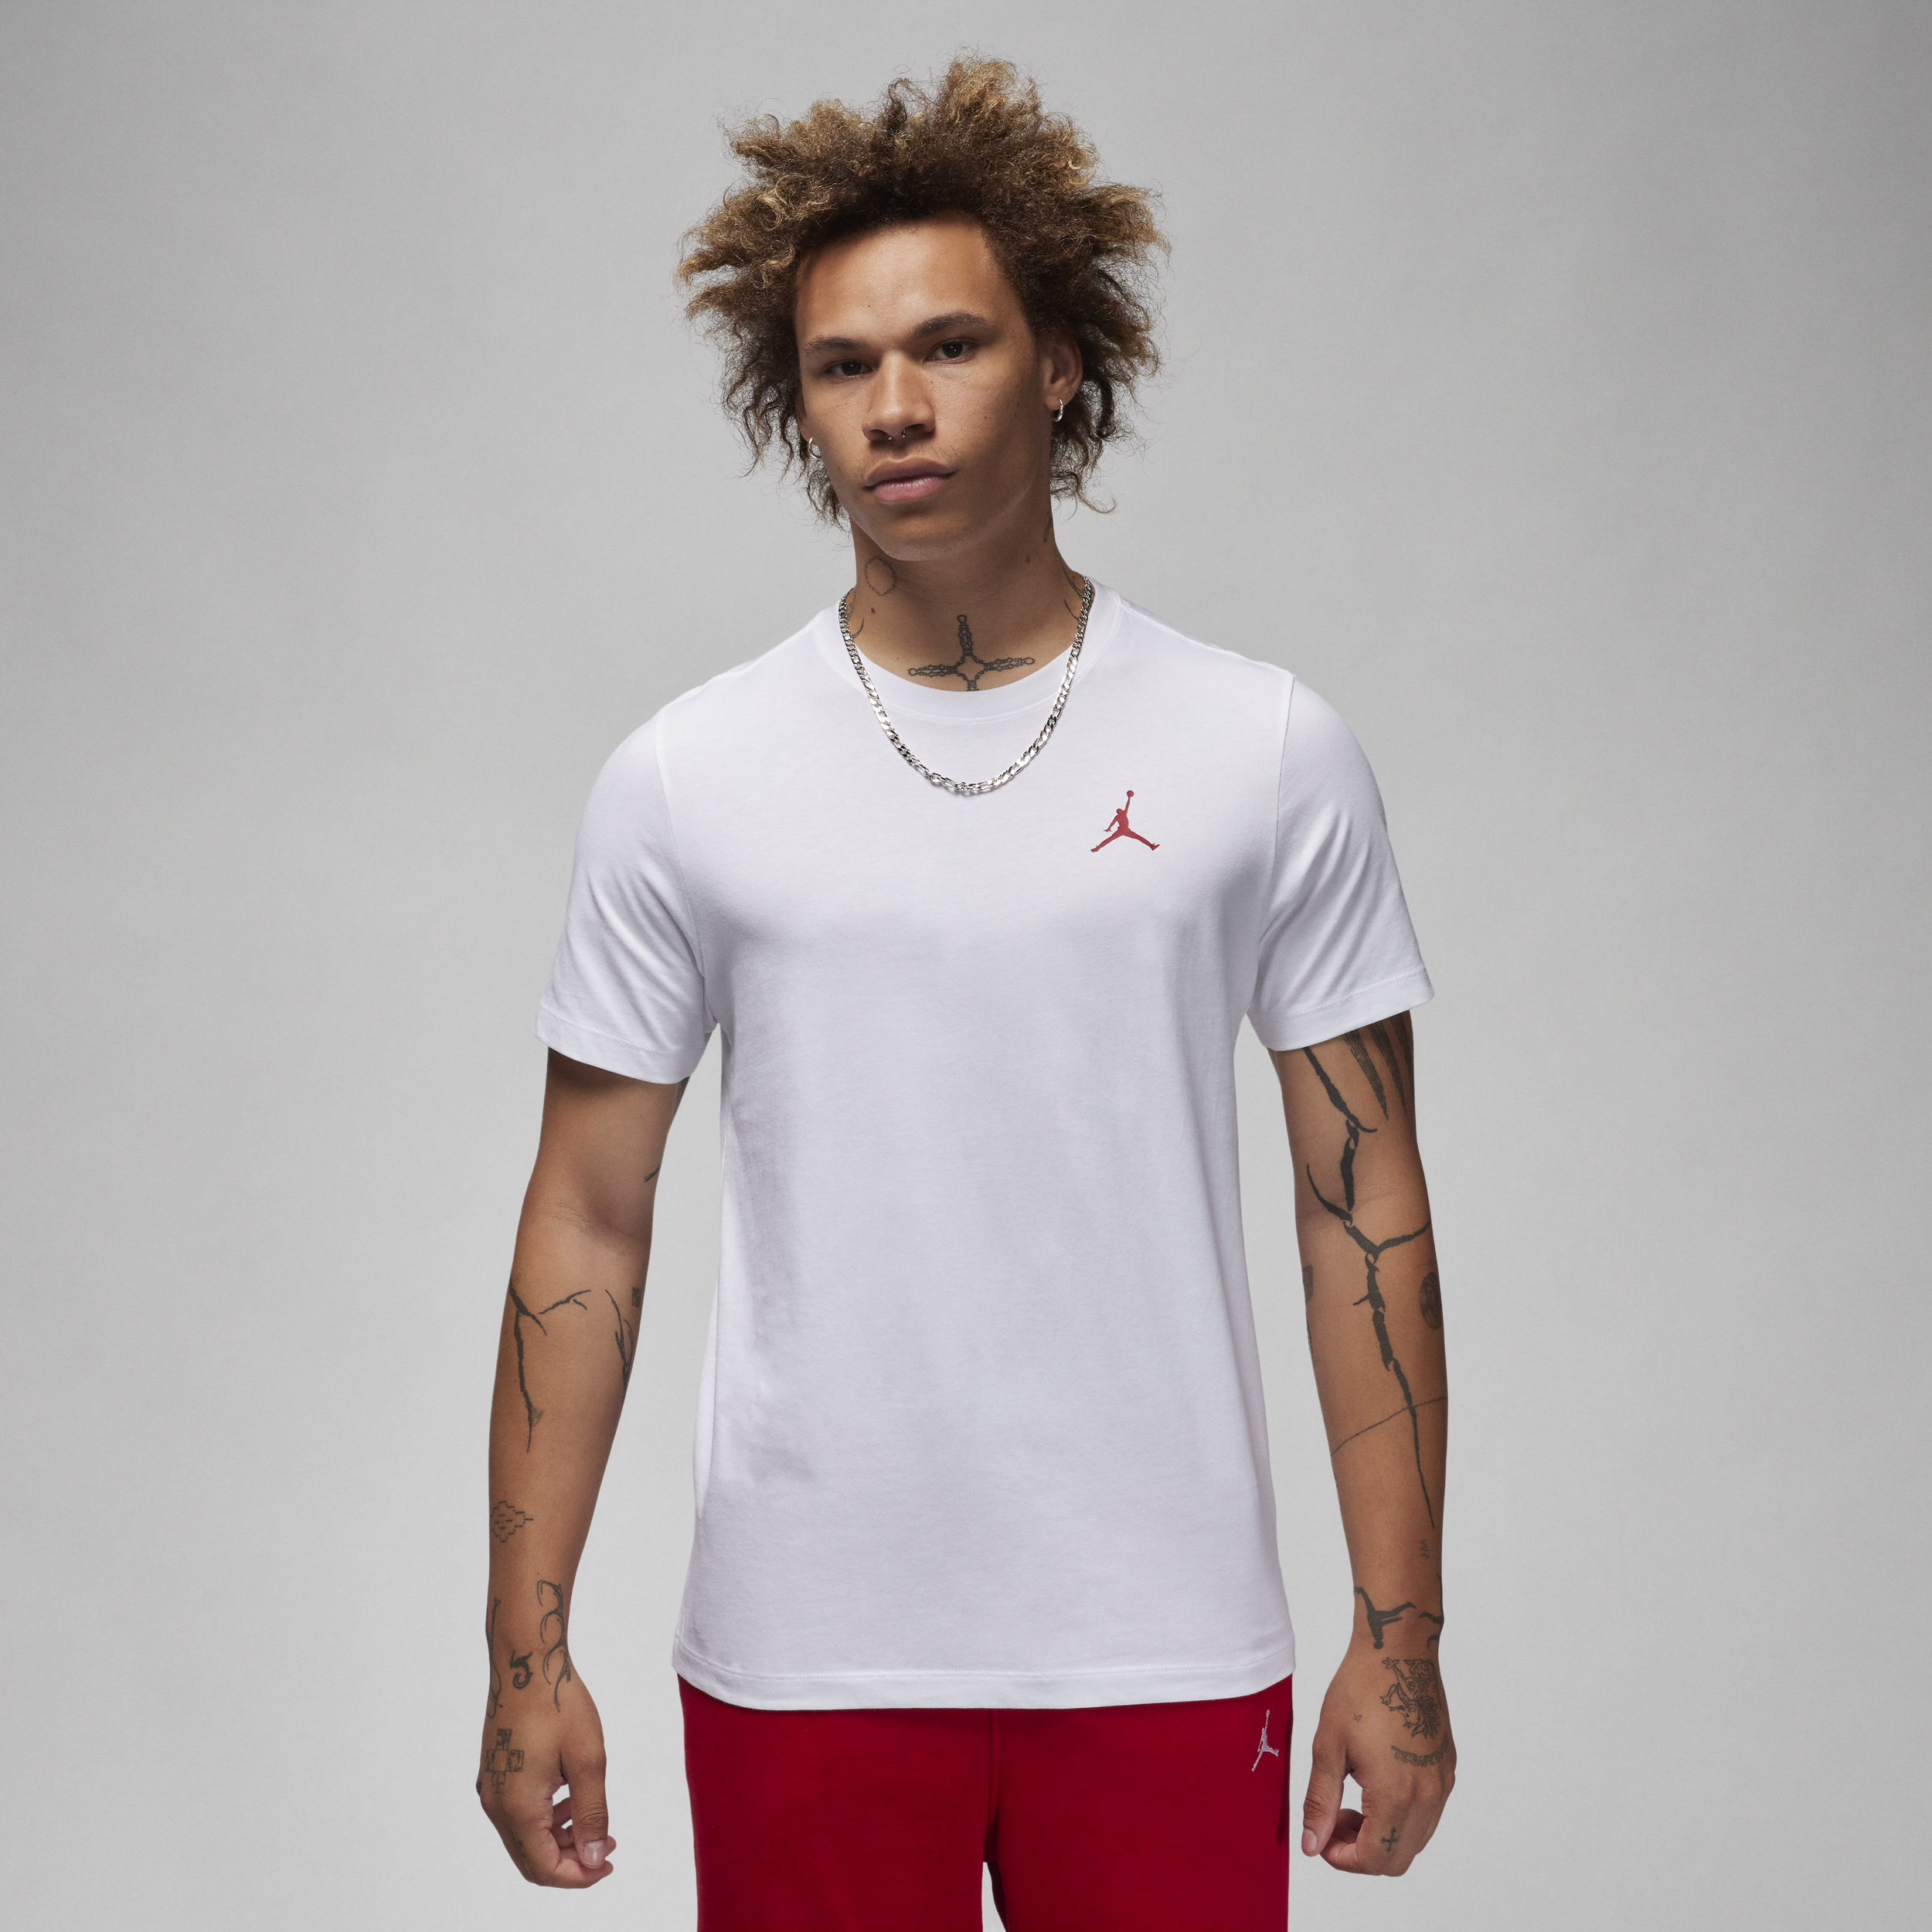 Jordan Brand Camiseta - Hombre - Blanco